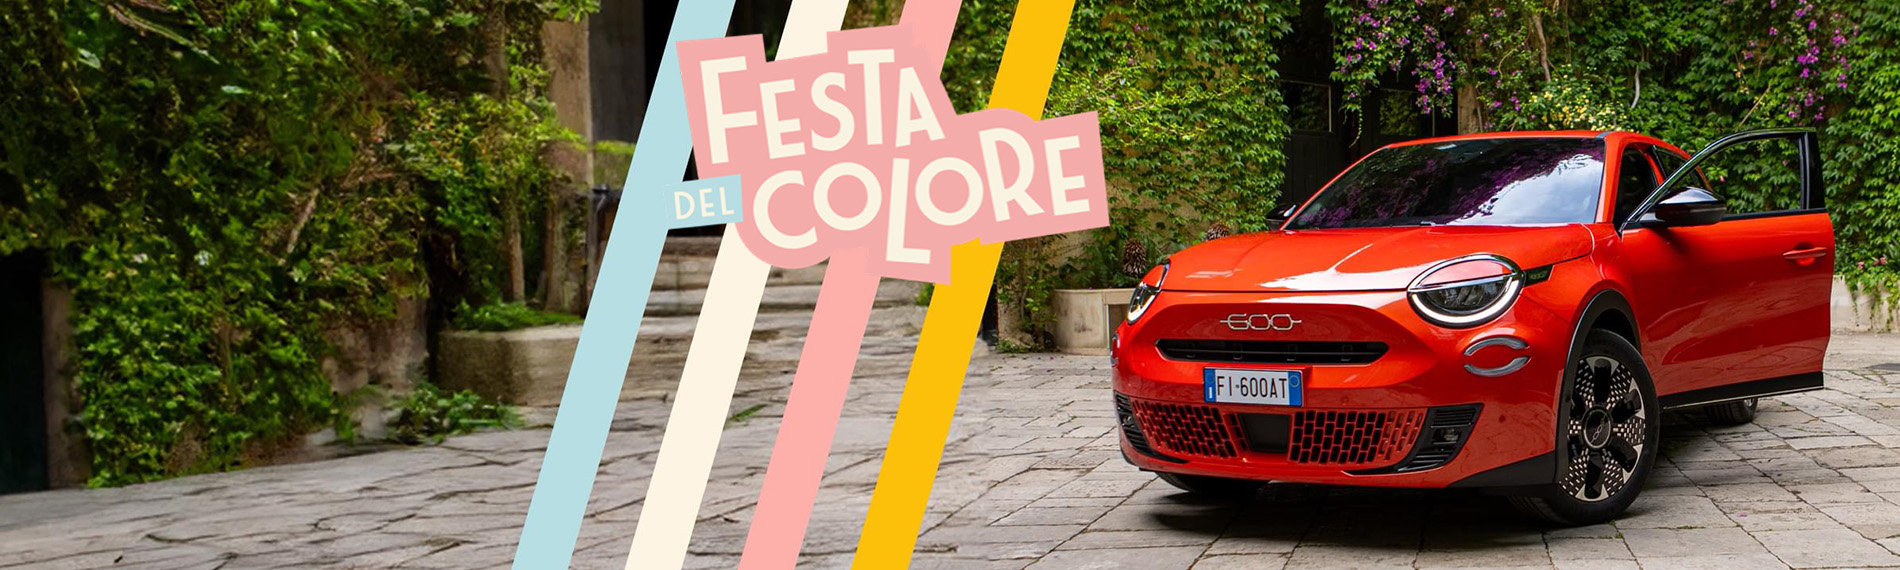 Festa del Colore: een kleurrijk festival bij MGH